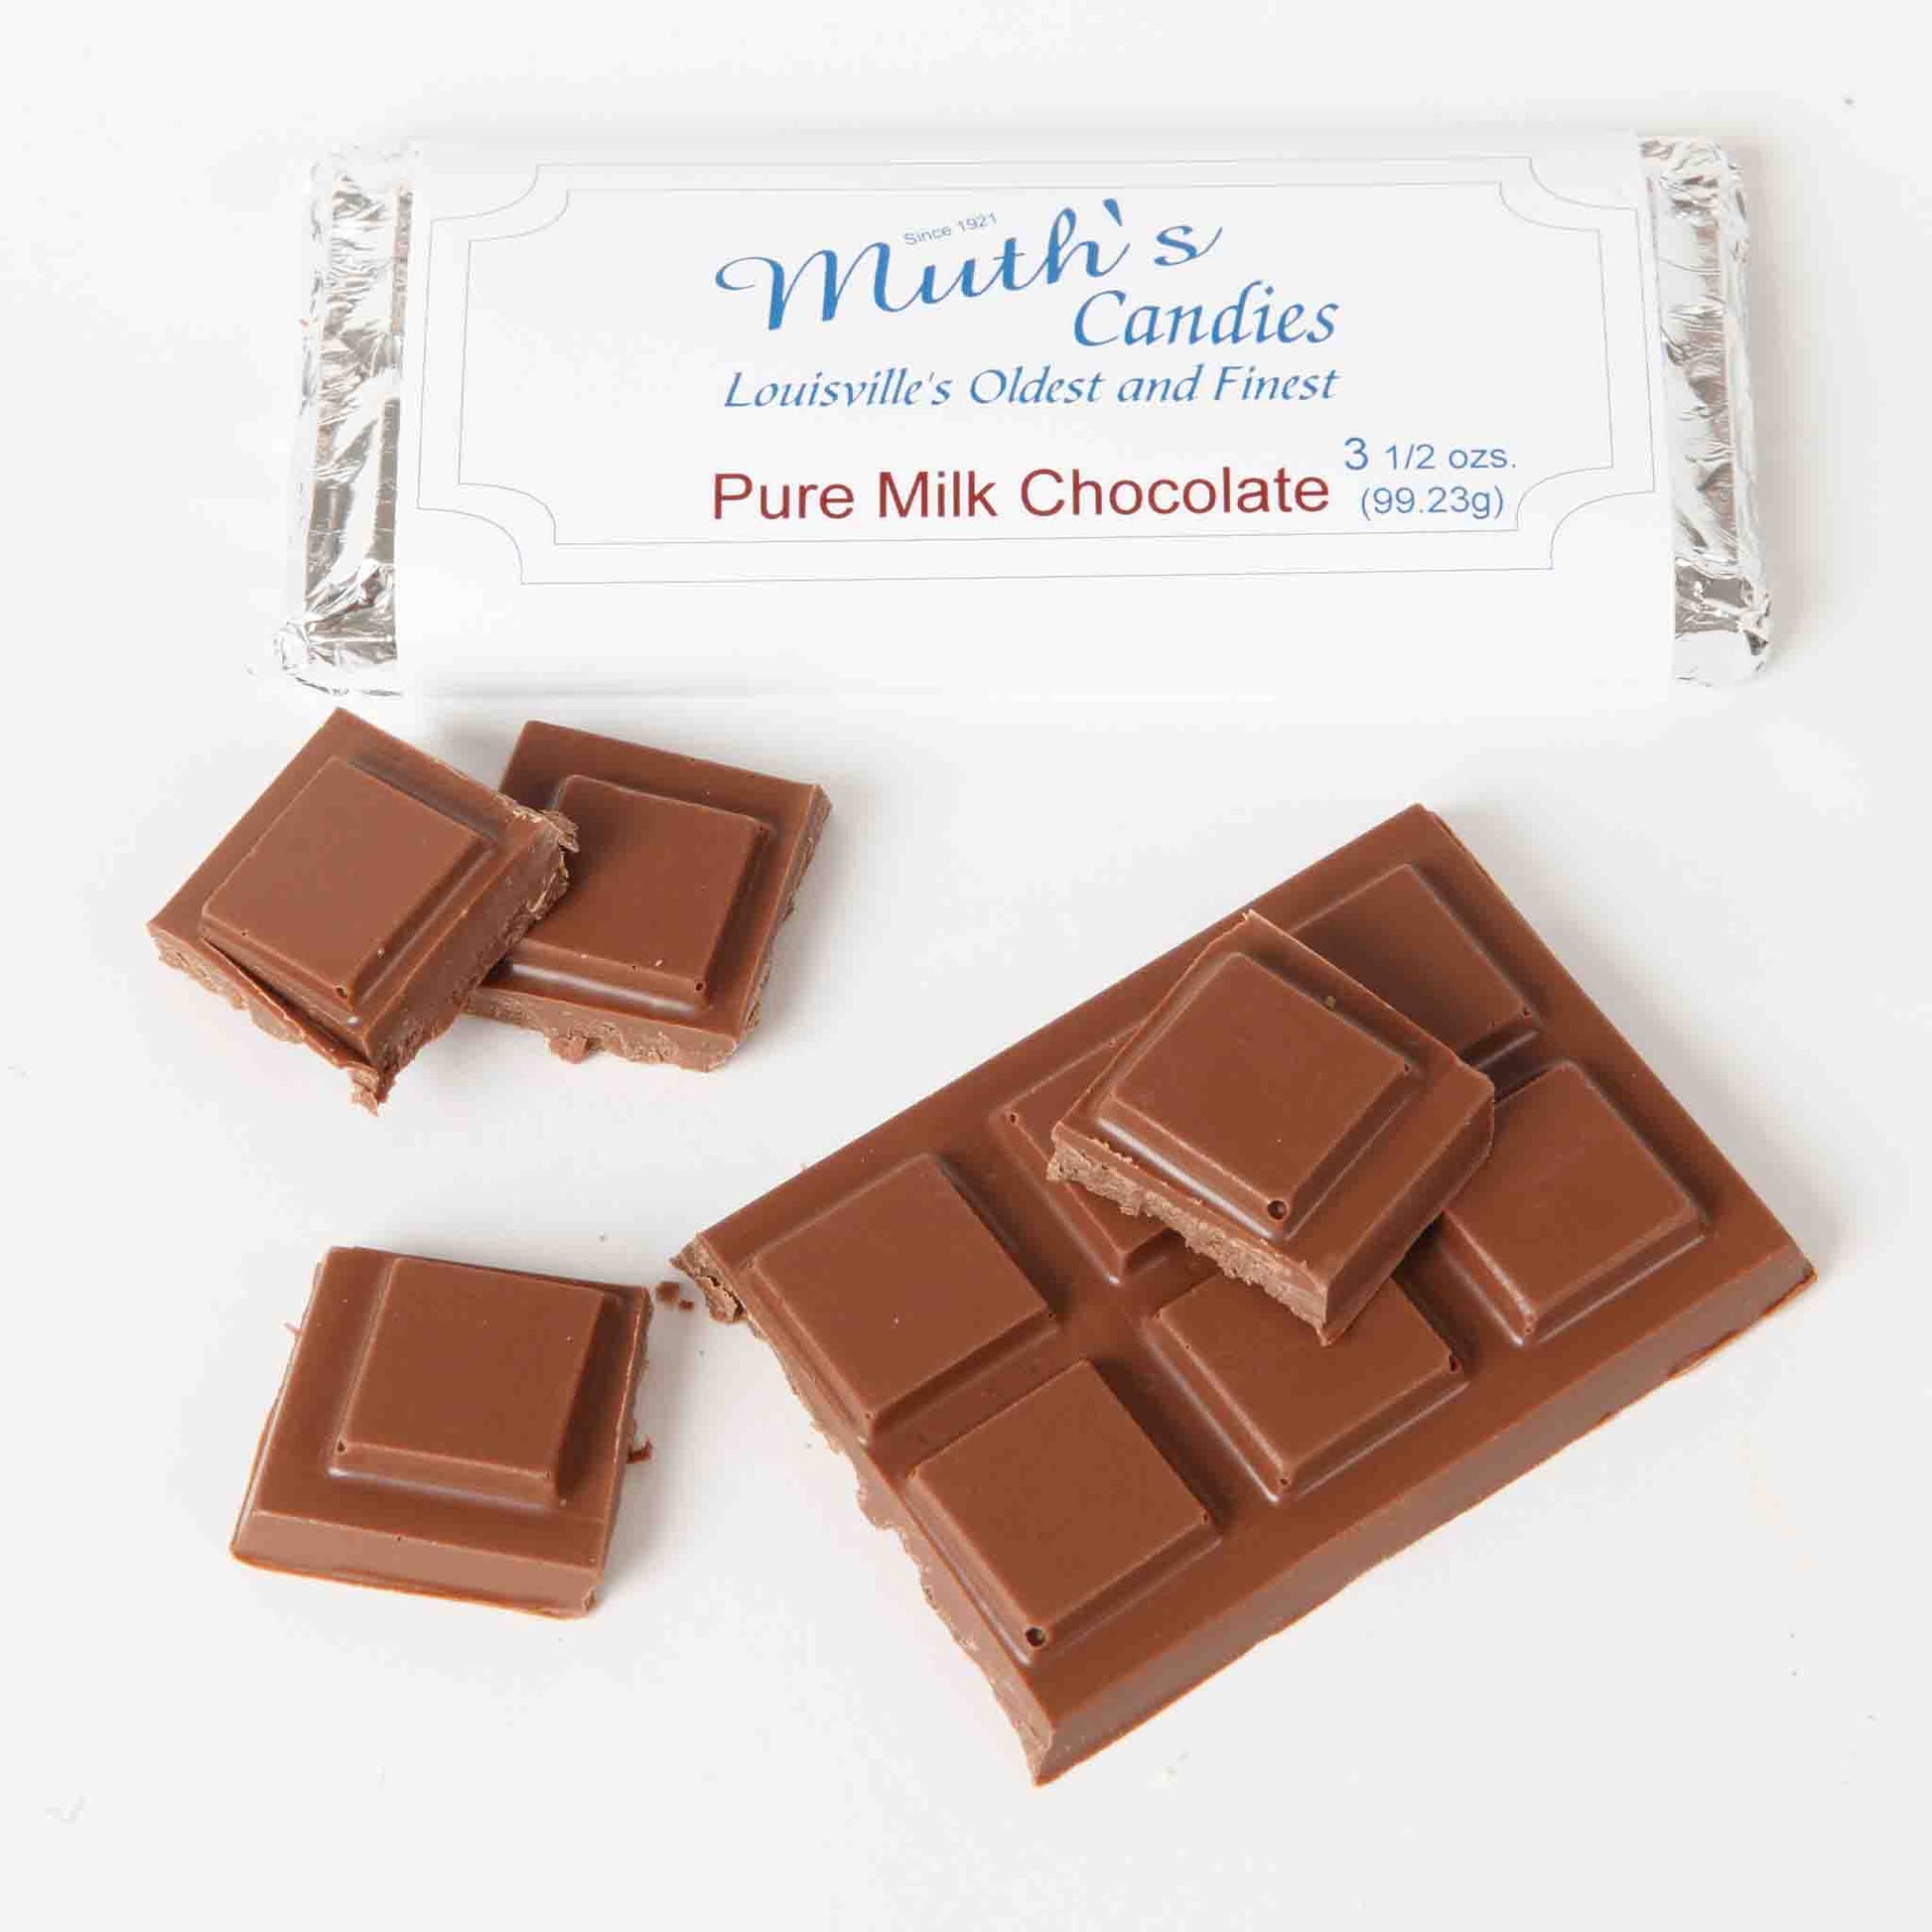 M&M'S Milk Chocolate Candy Share Size, 3.14 oz - Ralphs